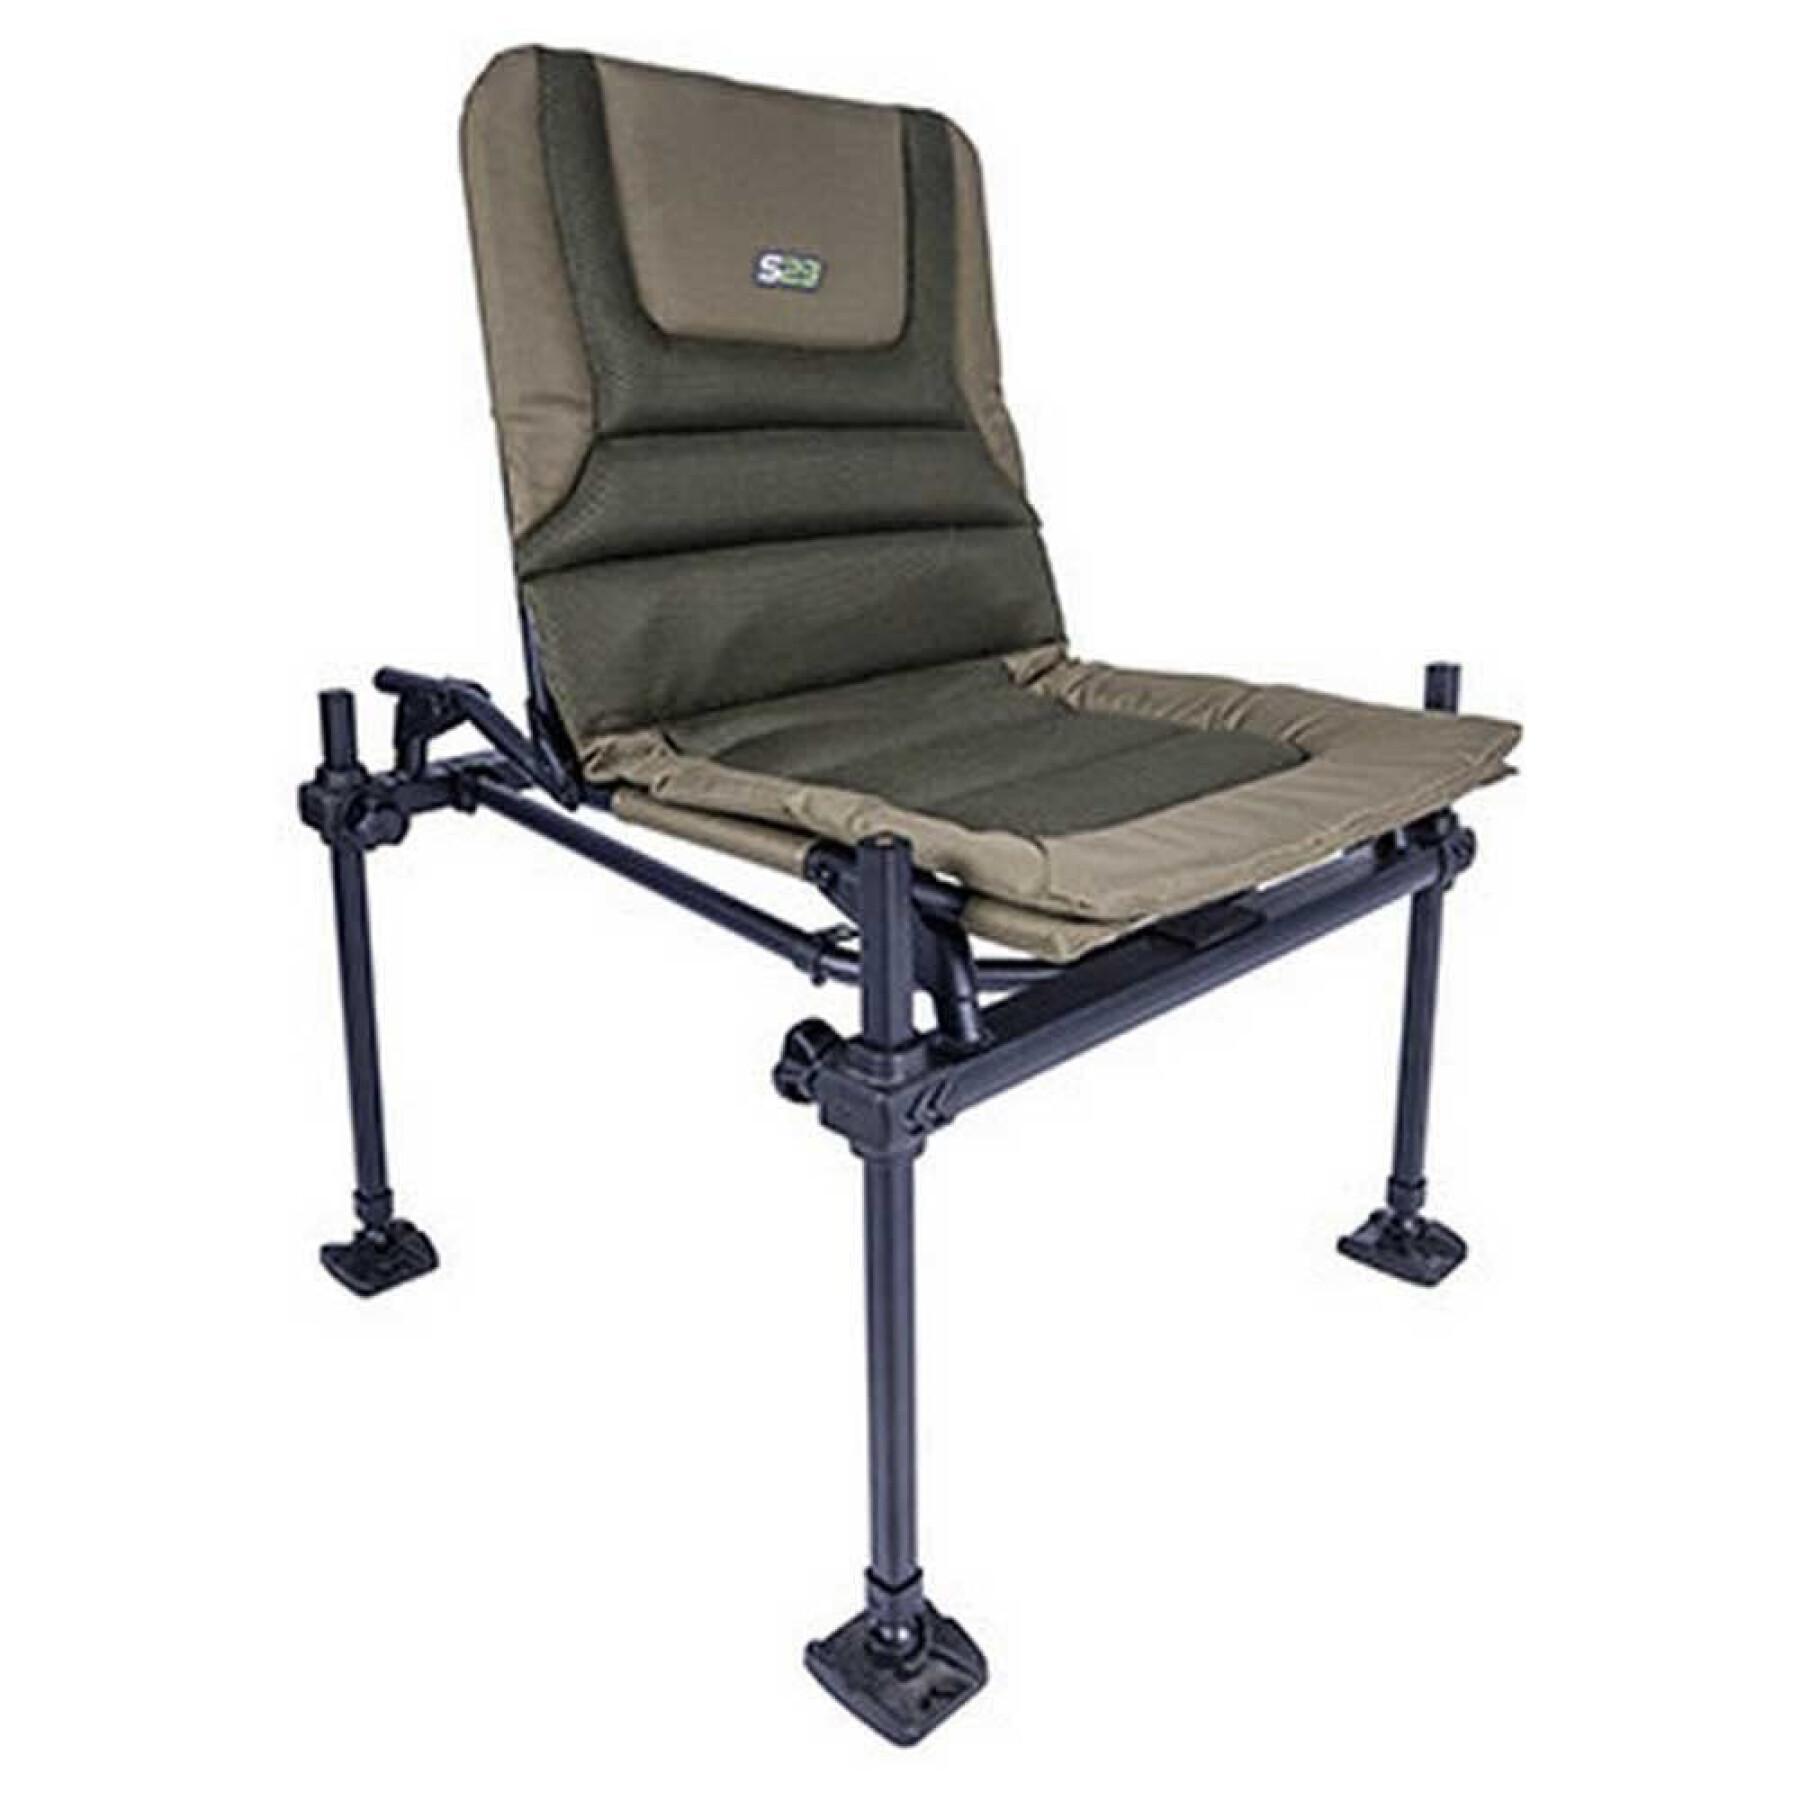 Standard accessory chairs Korum S23